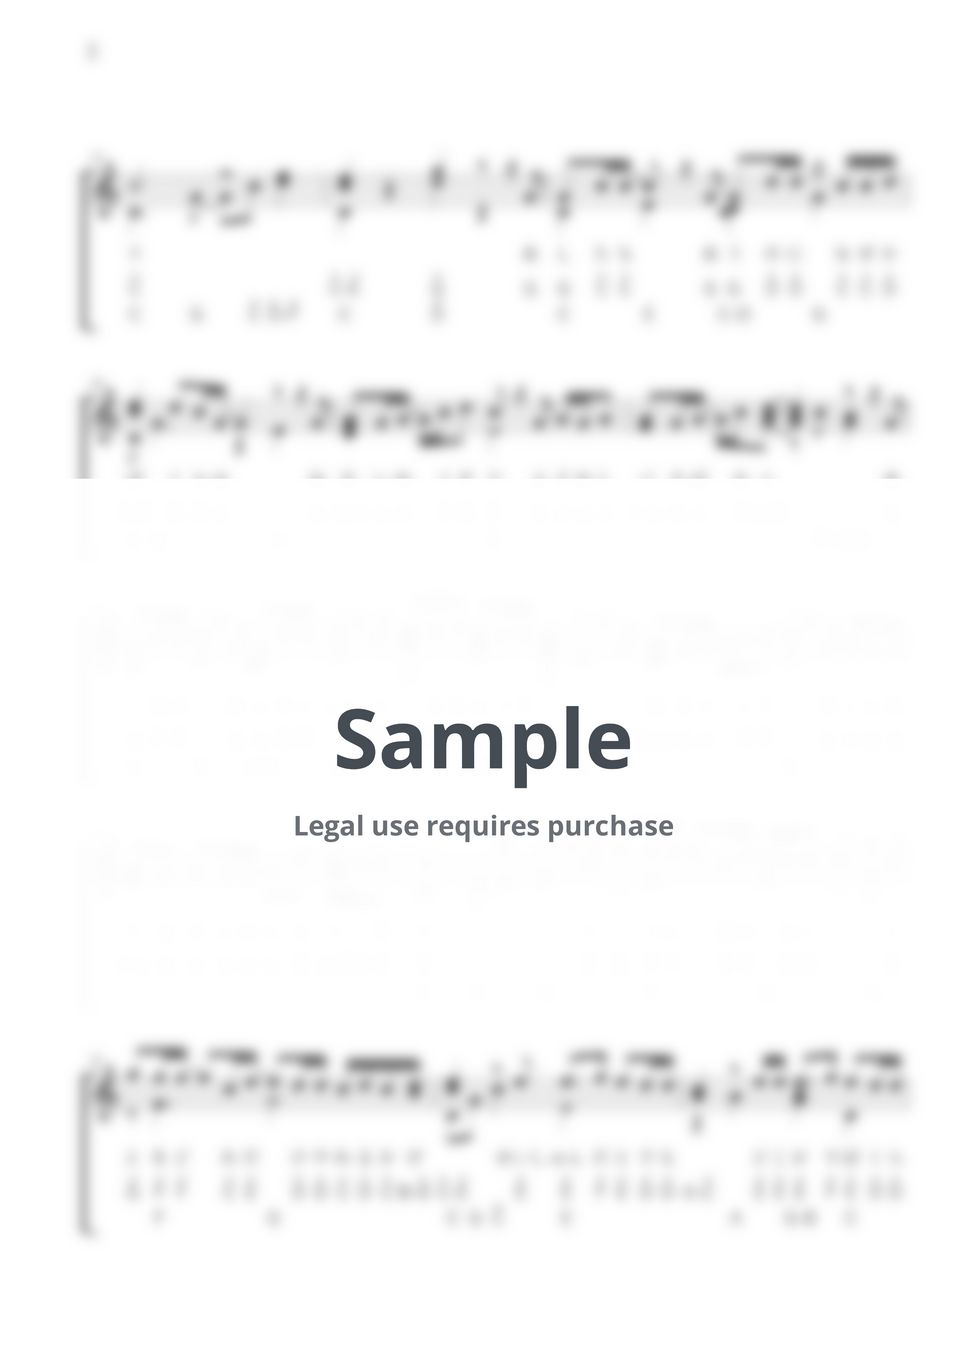 RADWIMPS - Sekai / 17 keys kalimba / Letter Notation by Misa / Kalimba Music